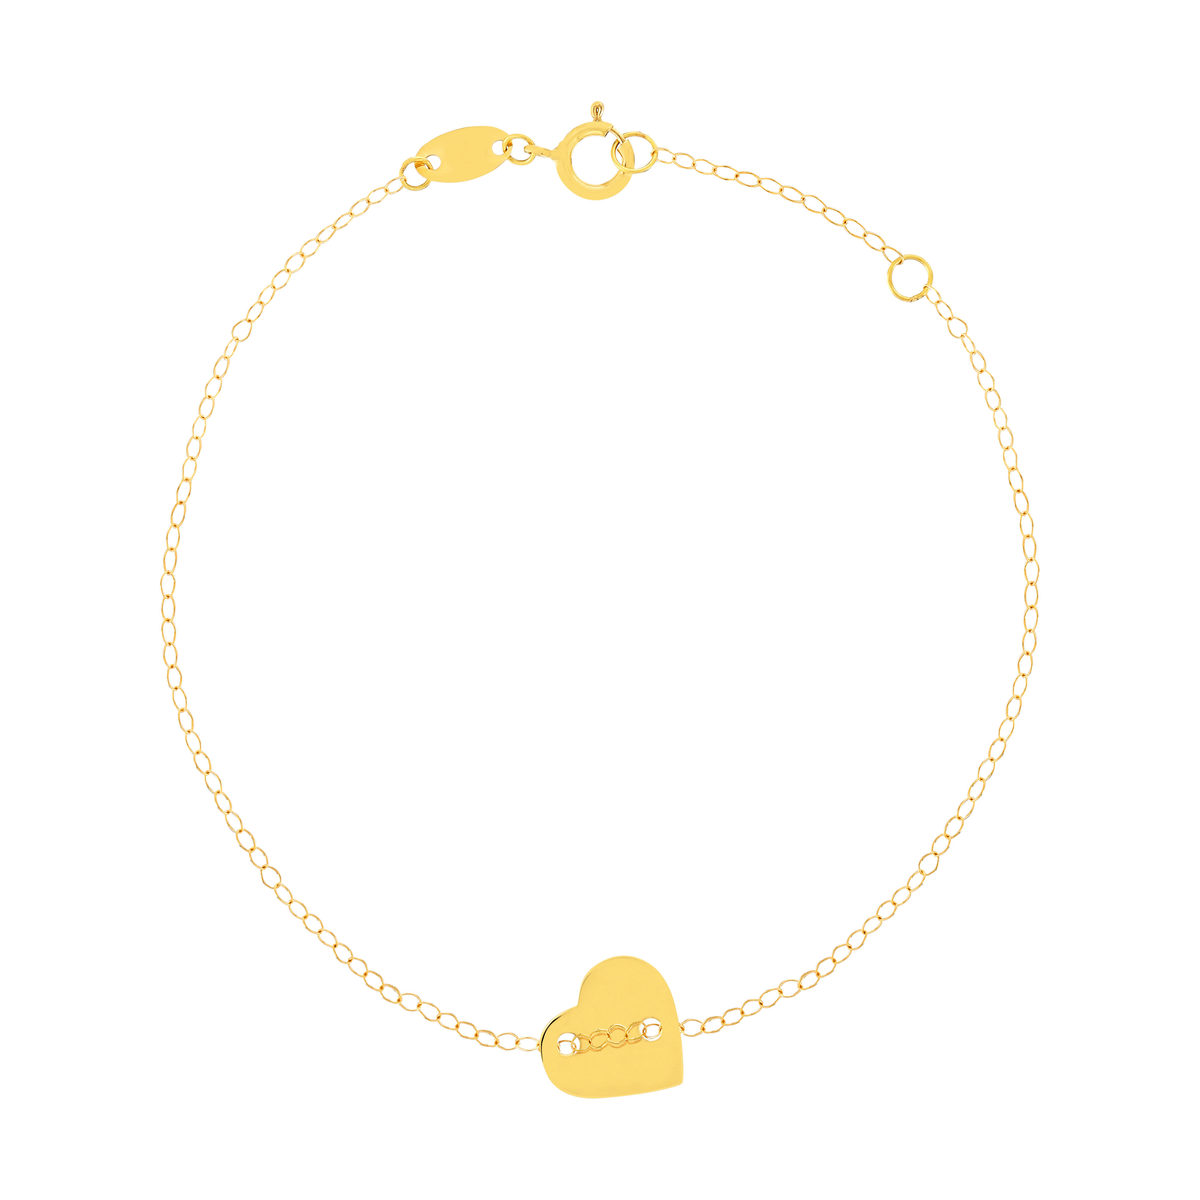 Bracelet or jaune 750 18 cm motif coeur